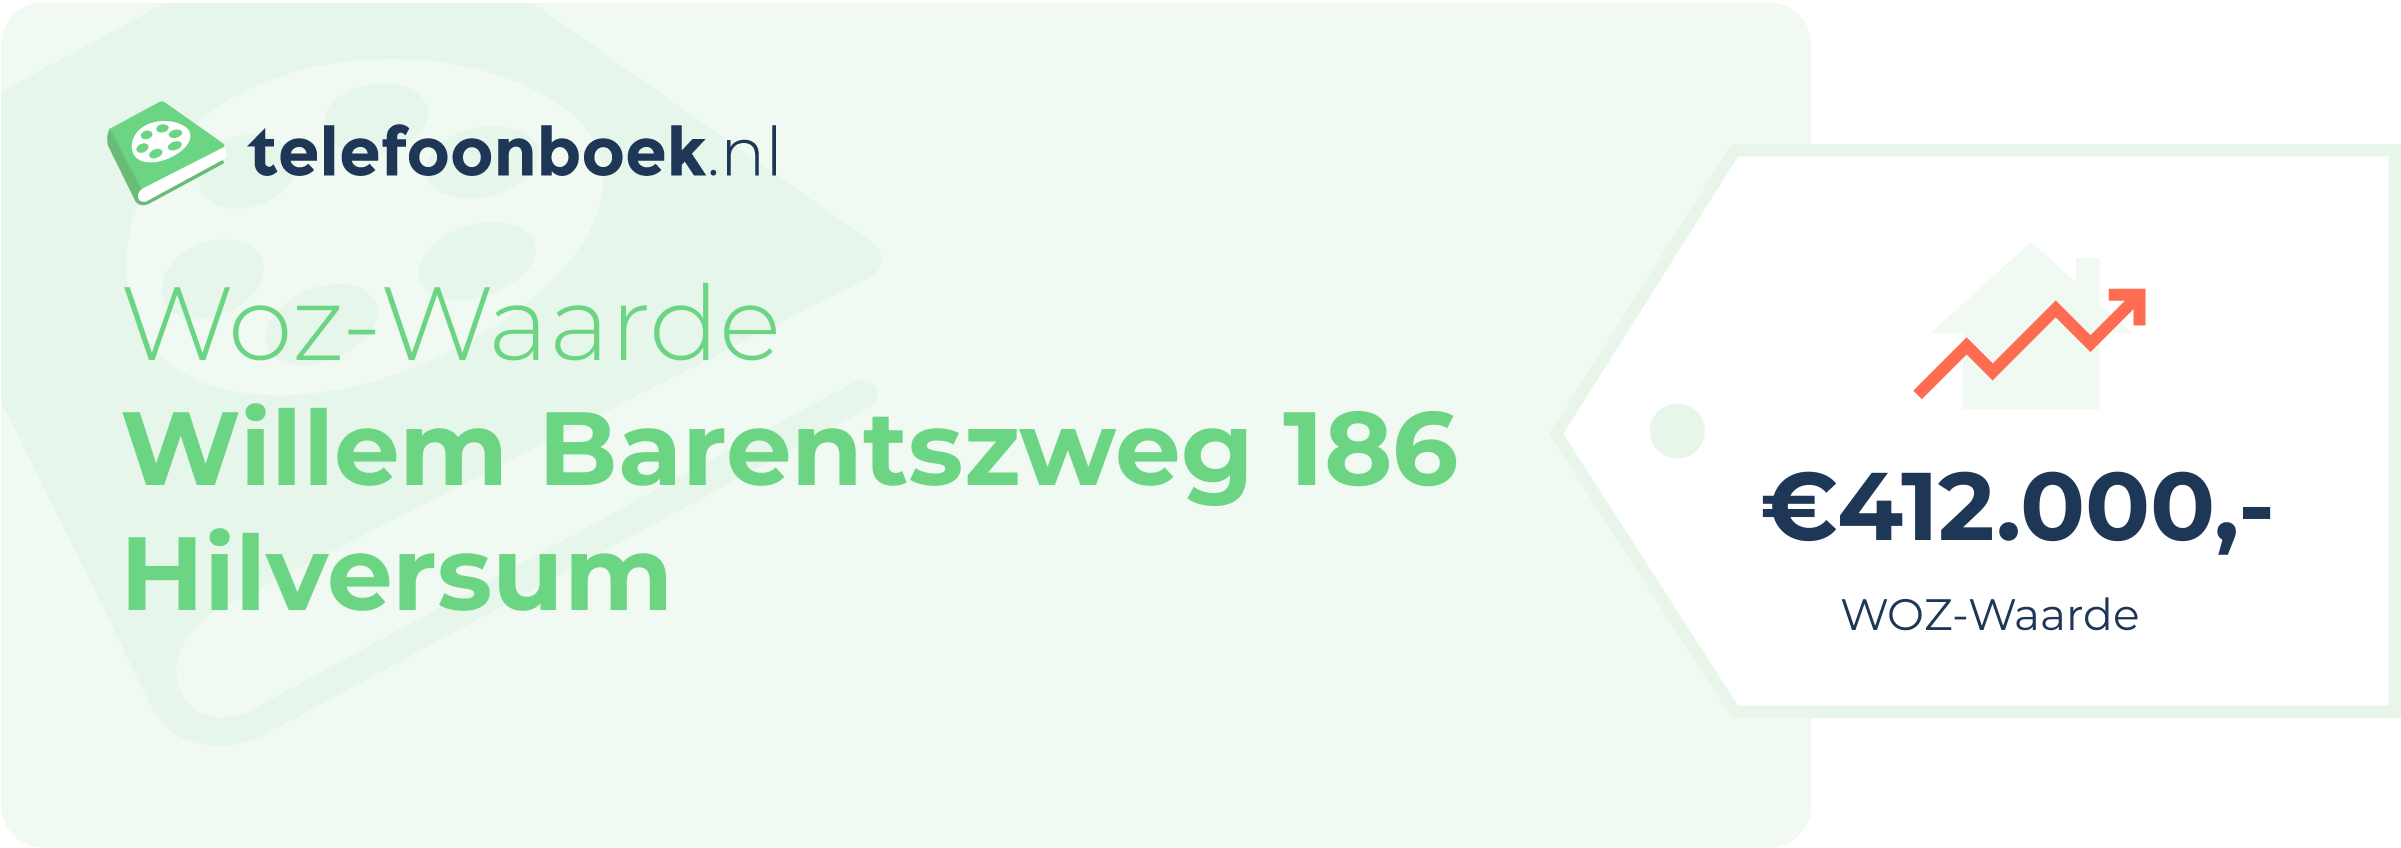 WOZ-waarde Willem Barentszweg 186 Hilversum